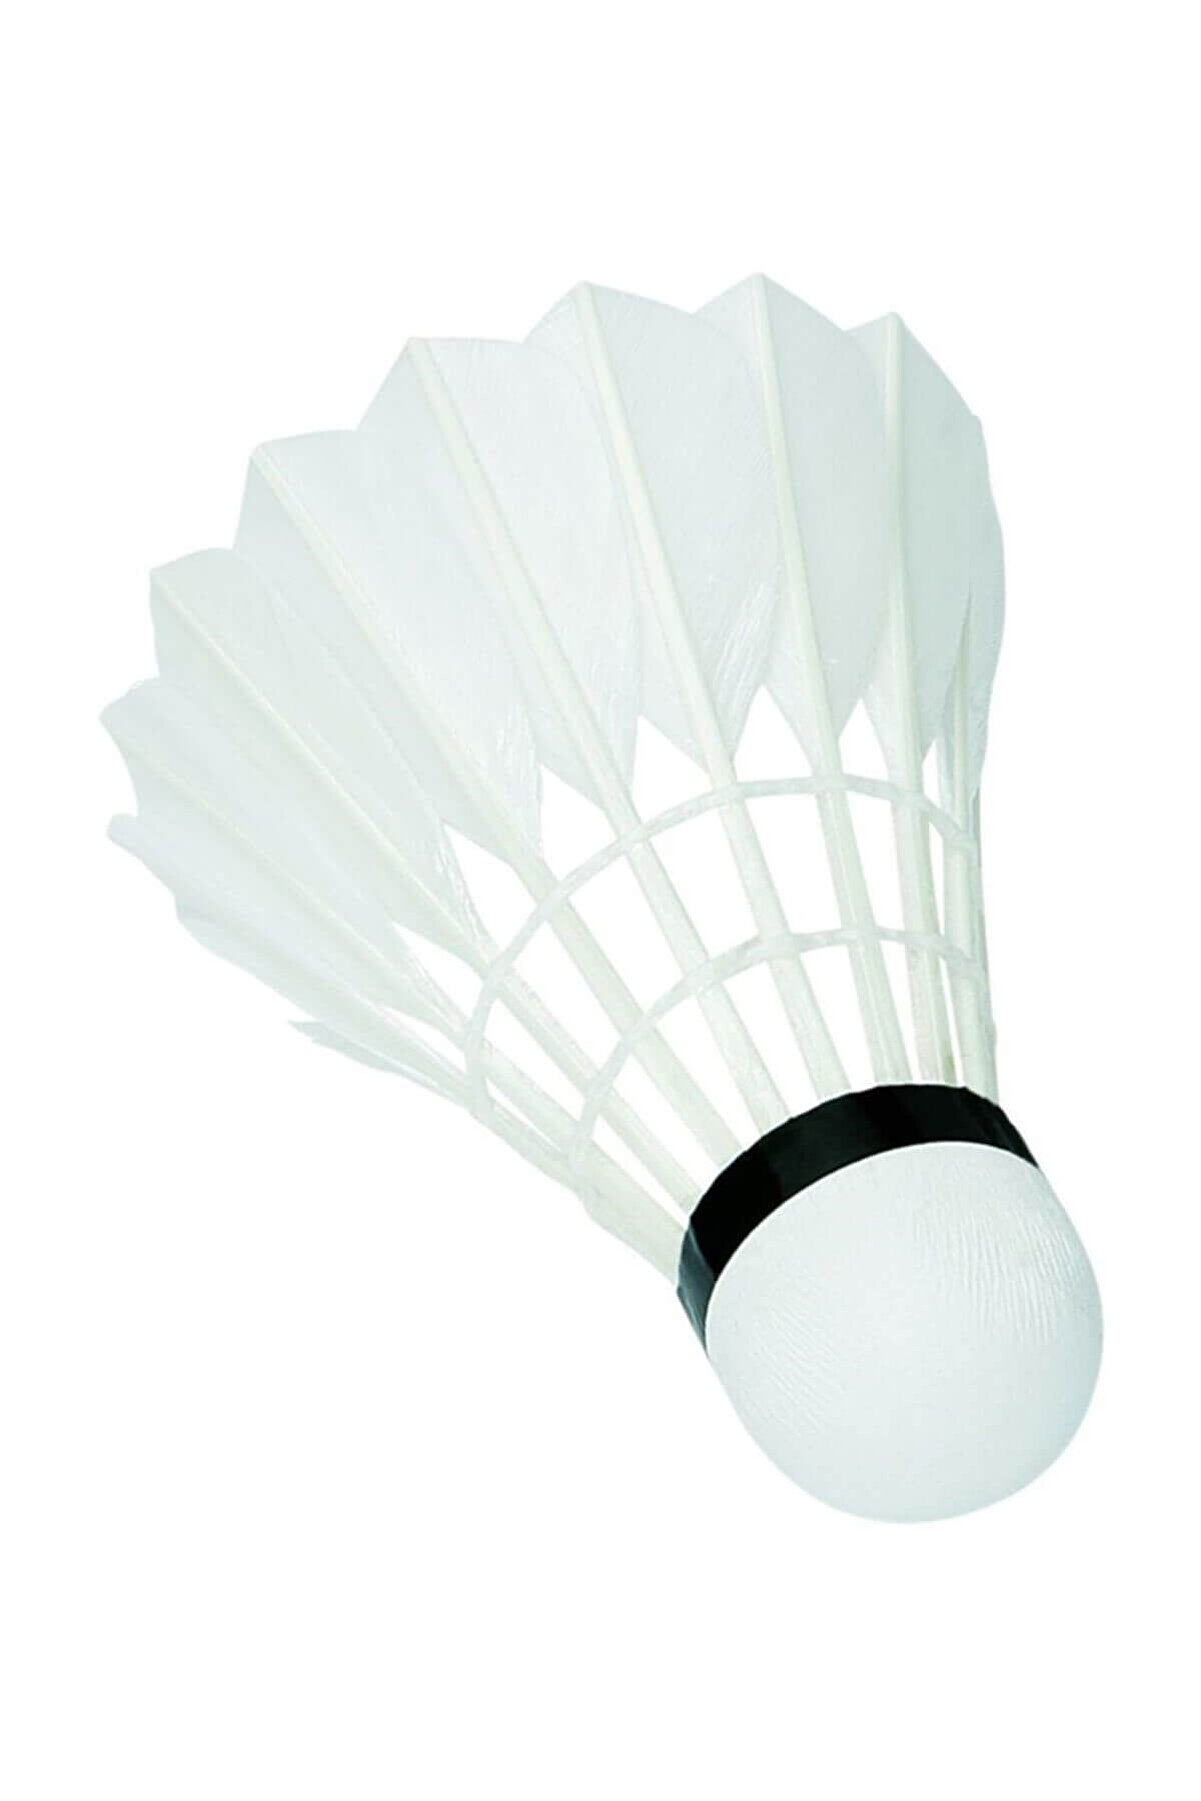 Genel Markalar Middle 3'lü Badminton Topu